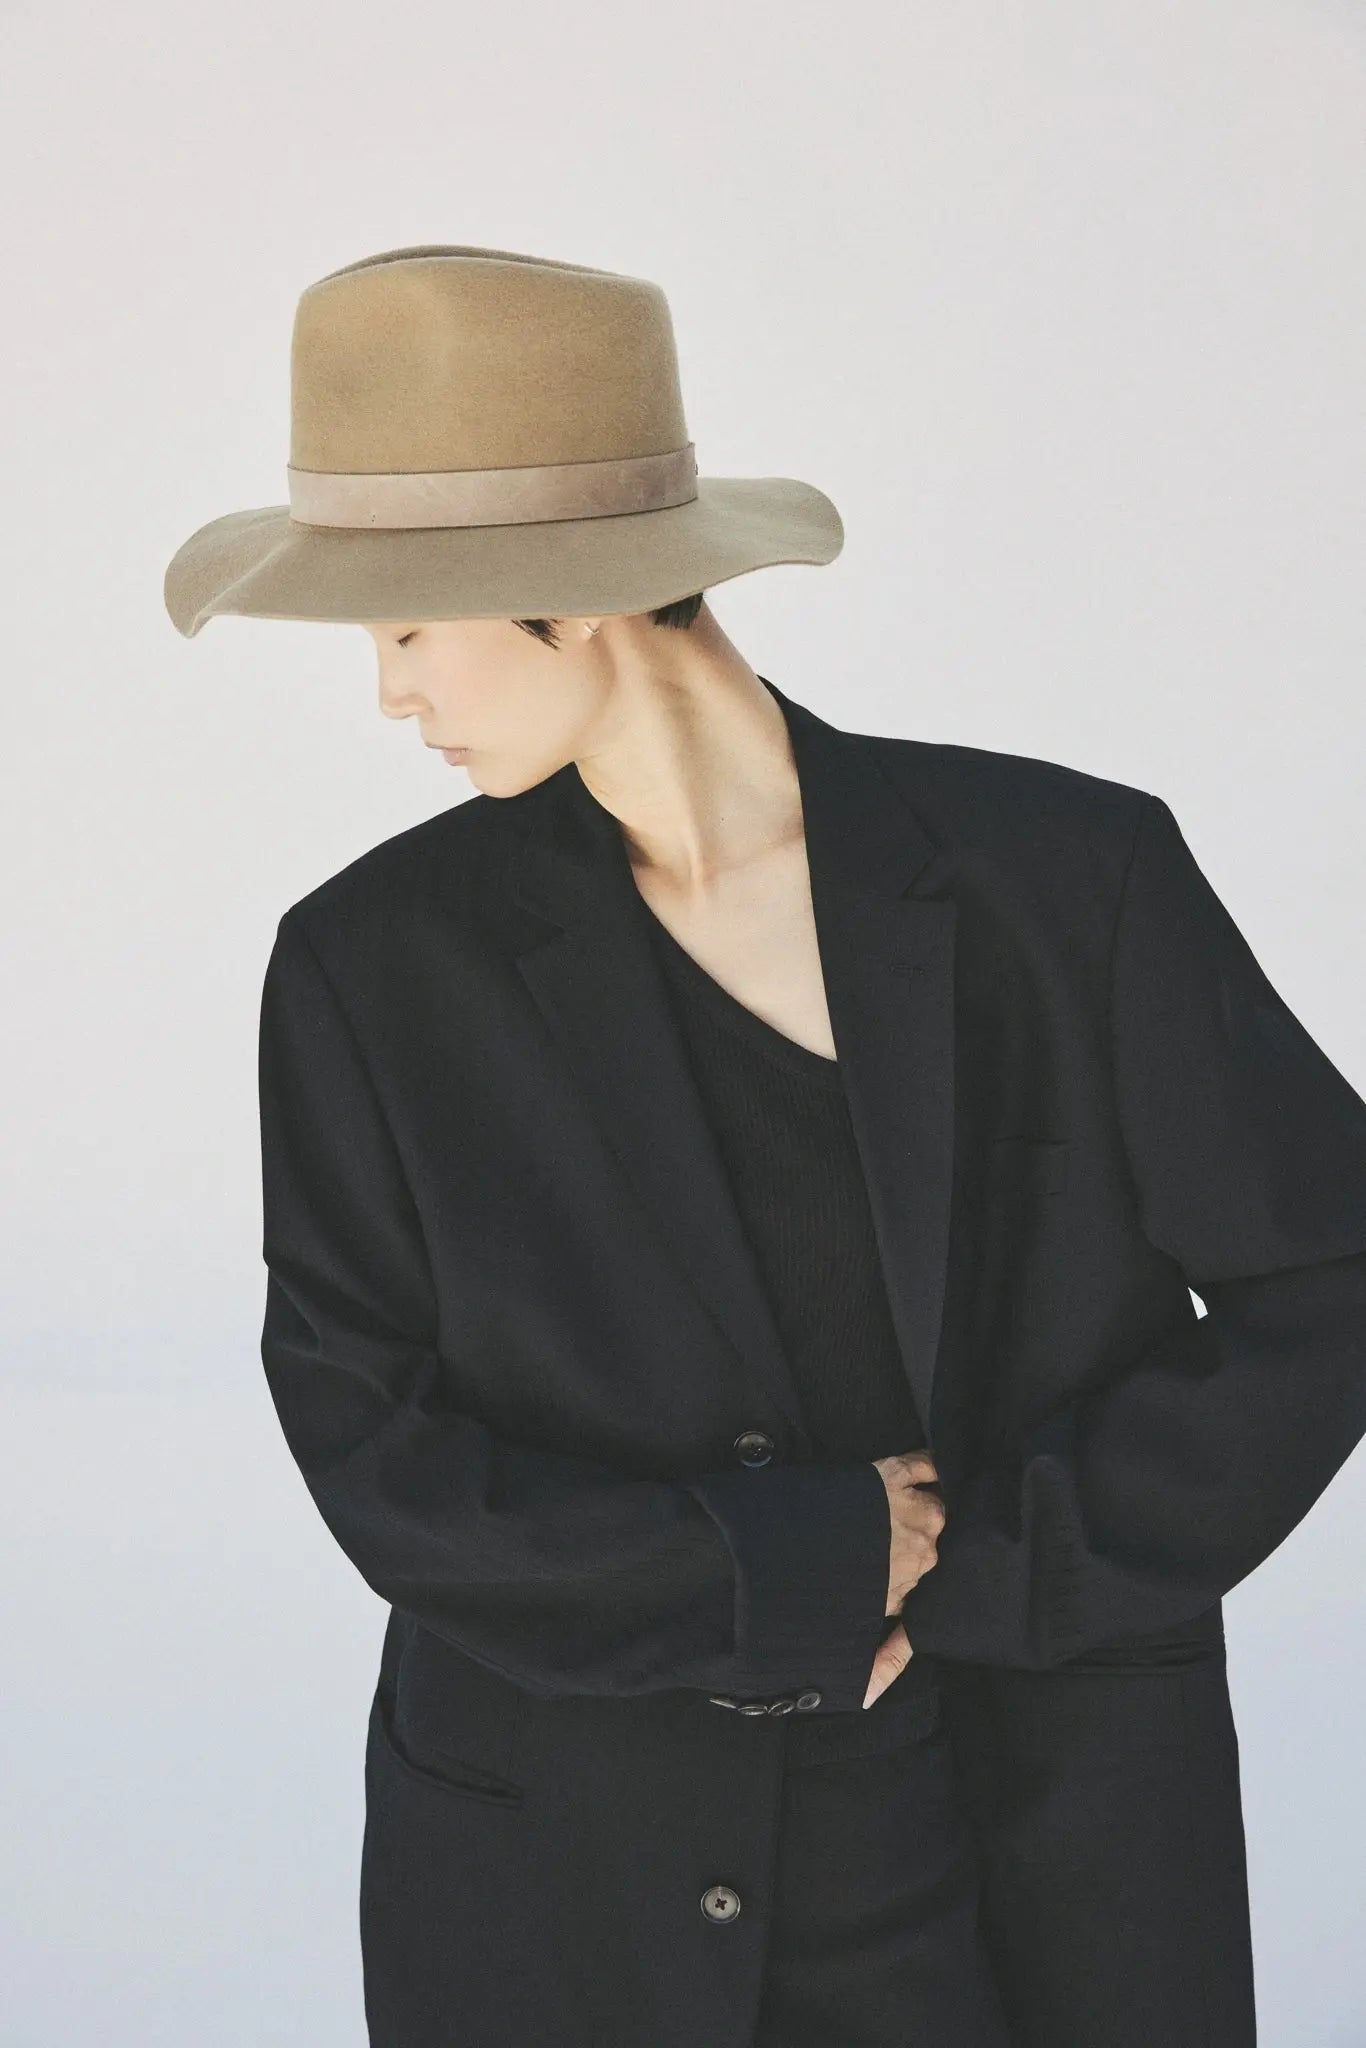 Model wearing luca fedora hat in color wheat